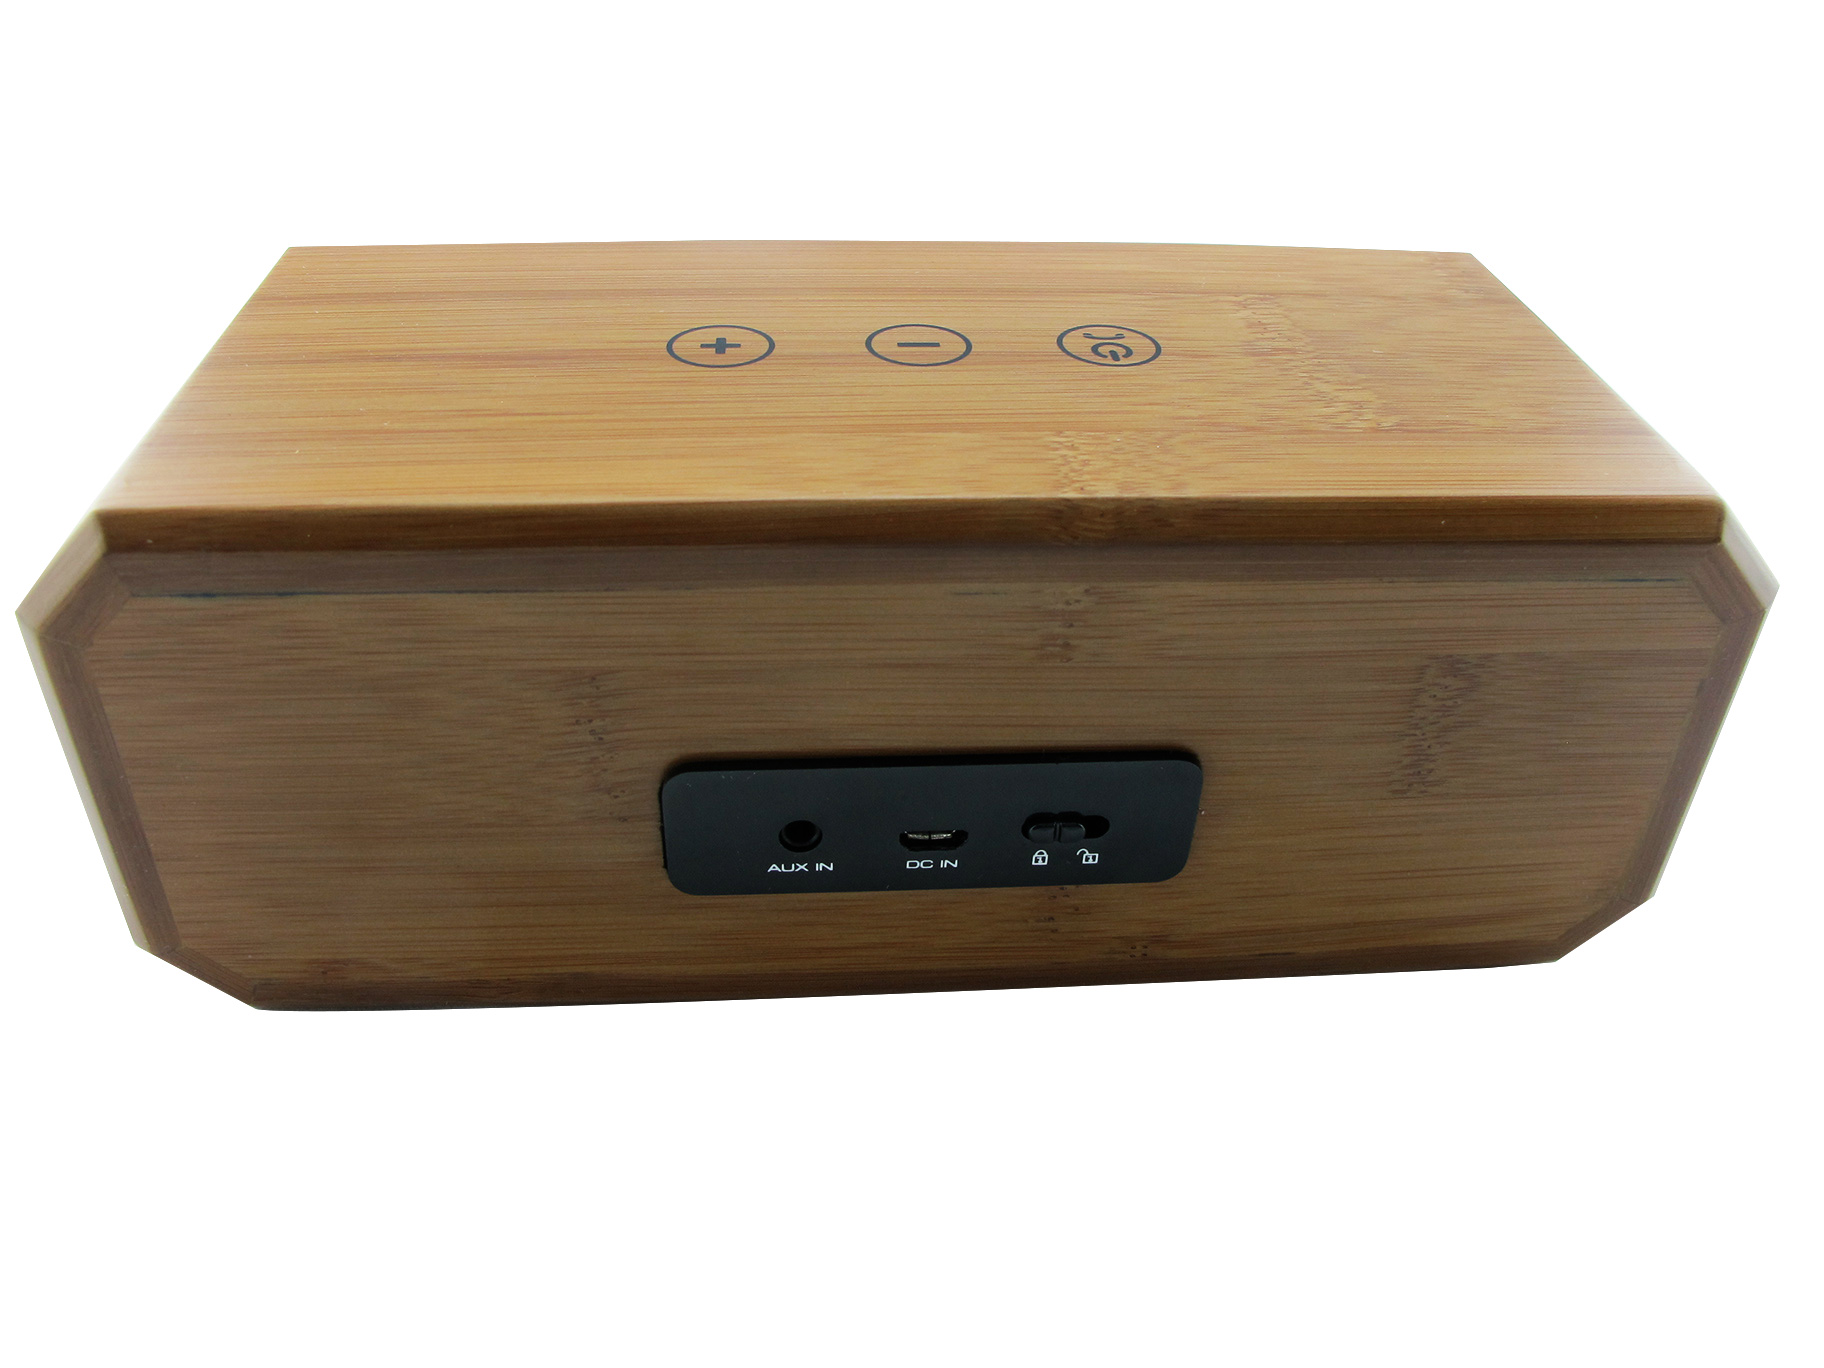 Wooden sound box super bass stereo sound portable bluetooth speaker